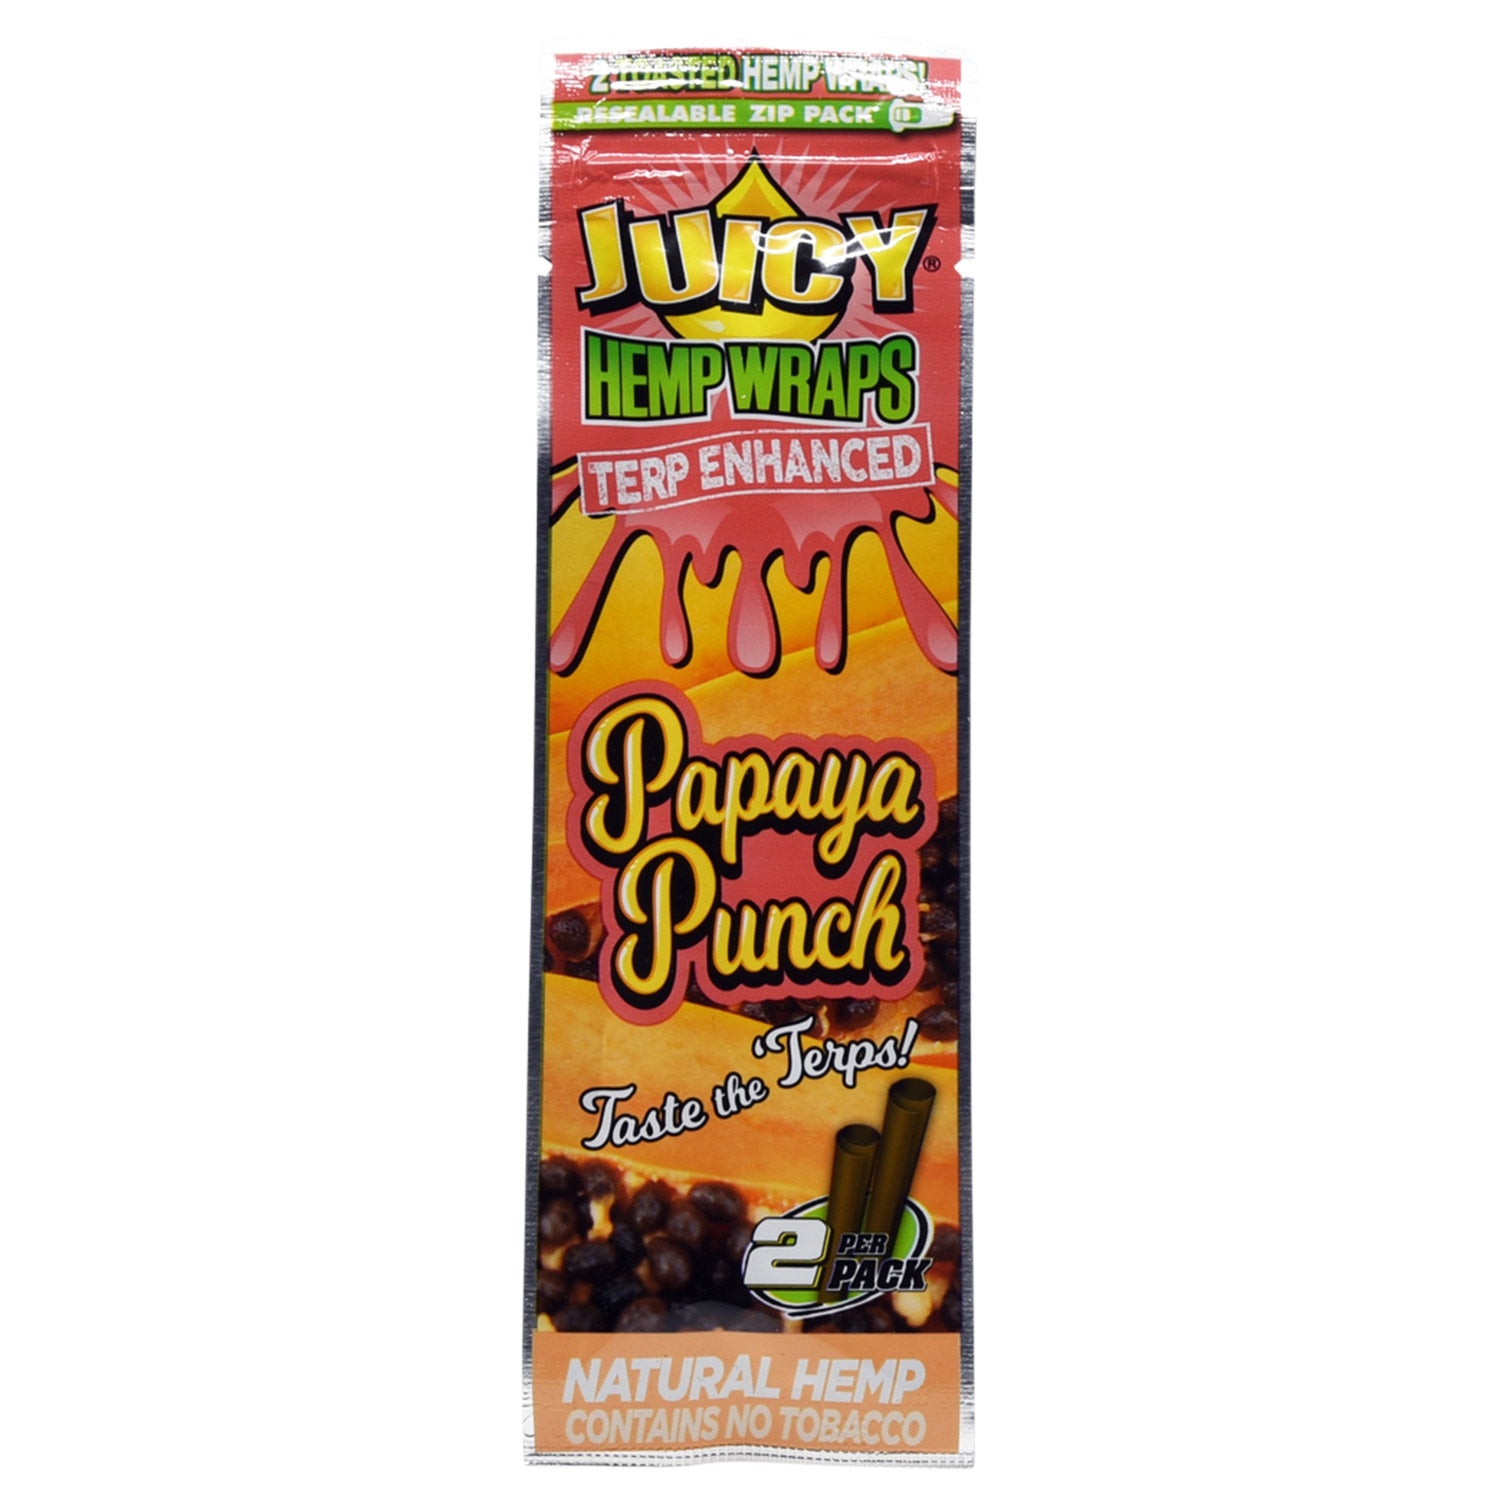 Juicy Jay's Terp Enhanced Hemp Wraps 2pck